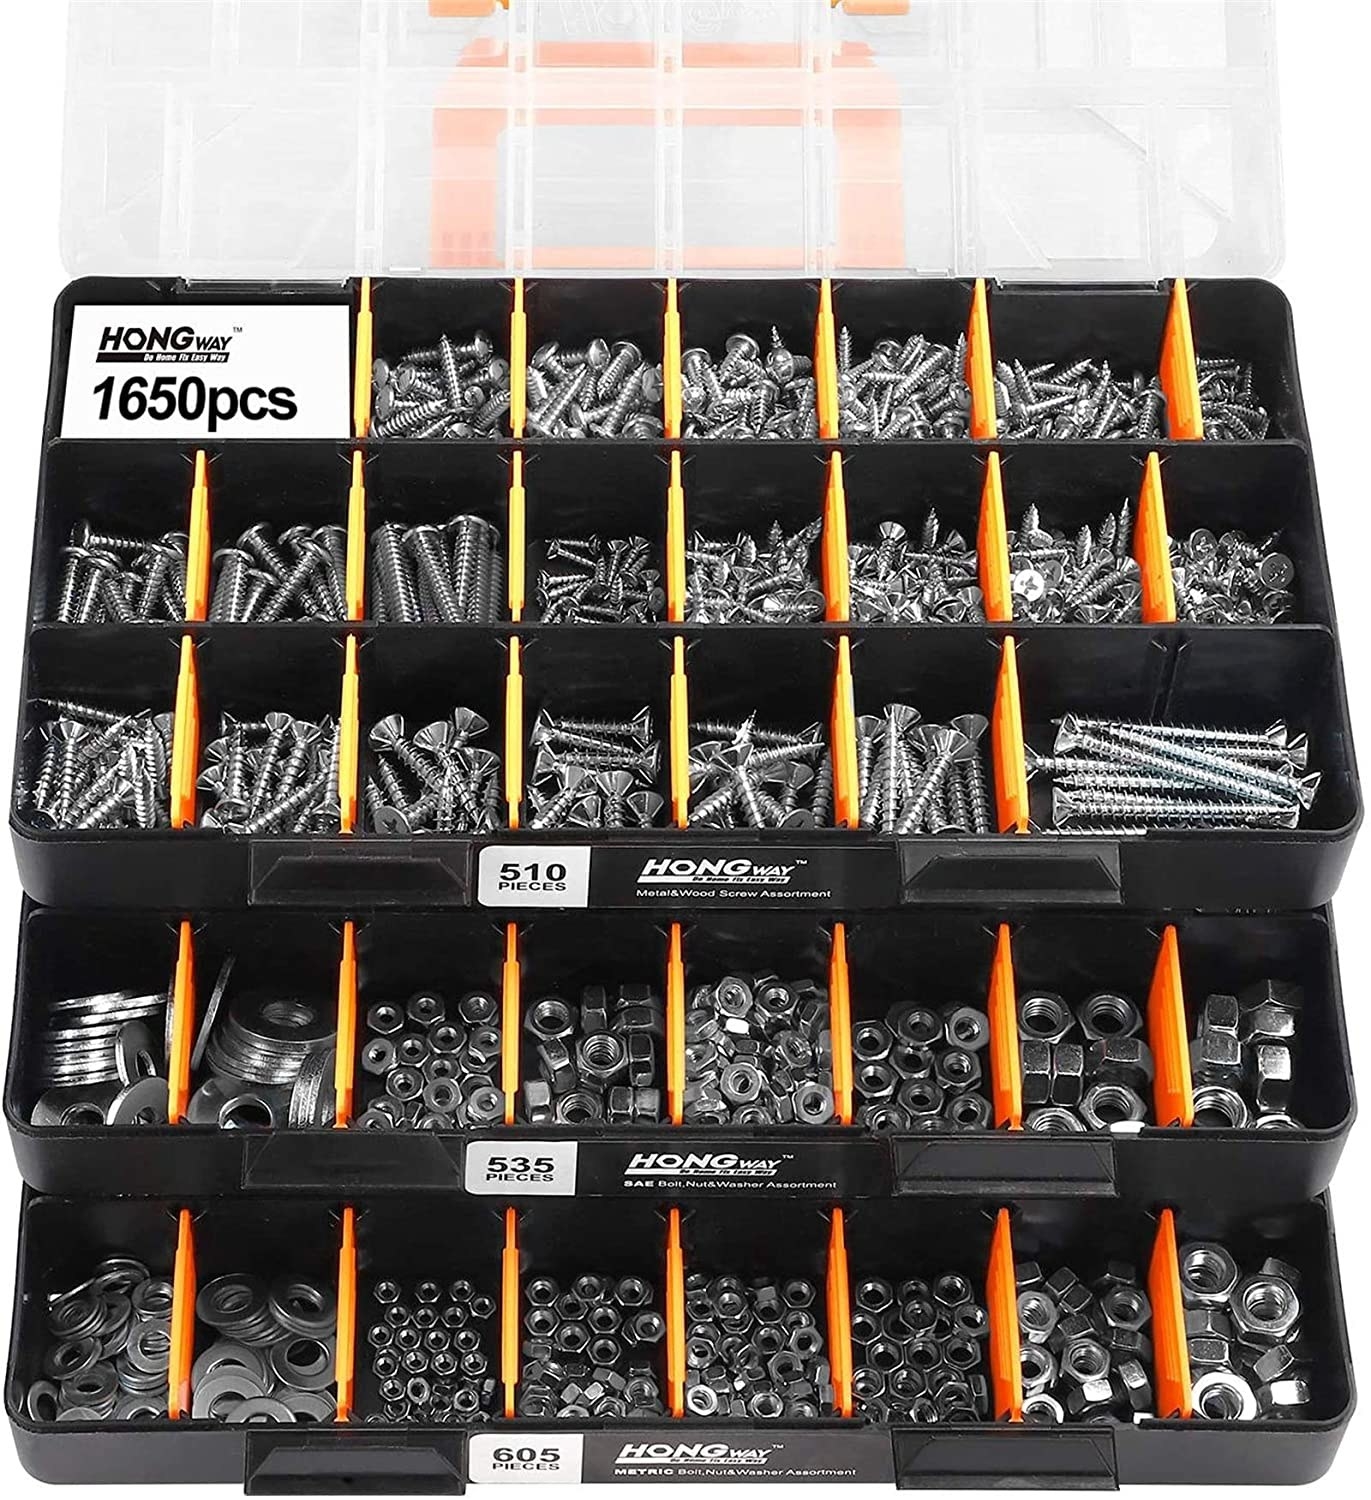 the 1650-piece kit in a black organizer